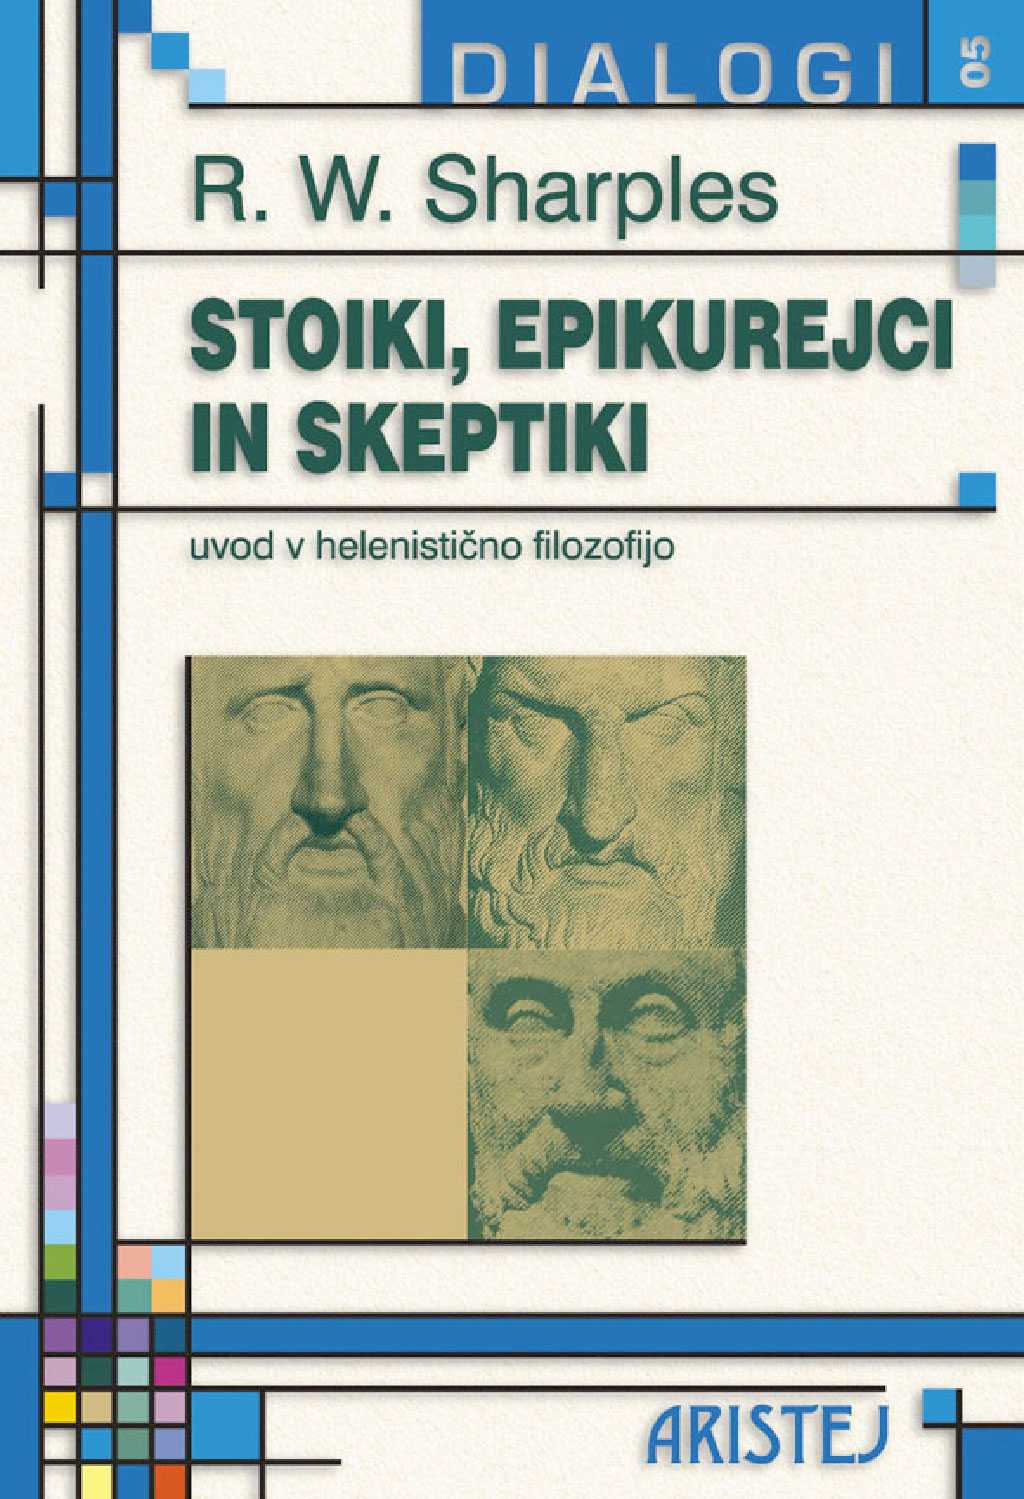 Stoiki, epikurejci in skeptiki